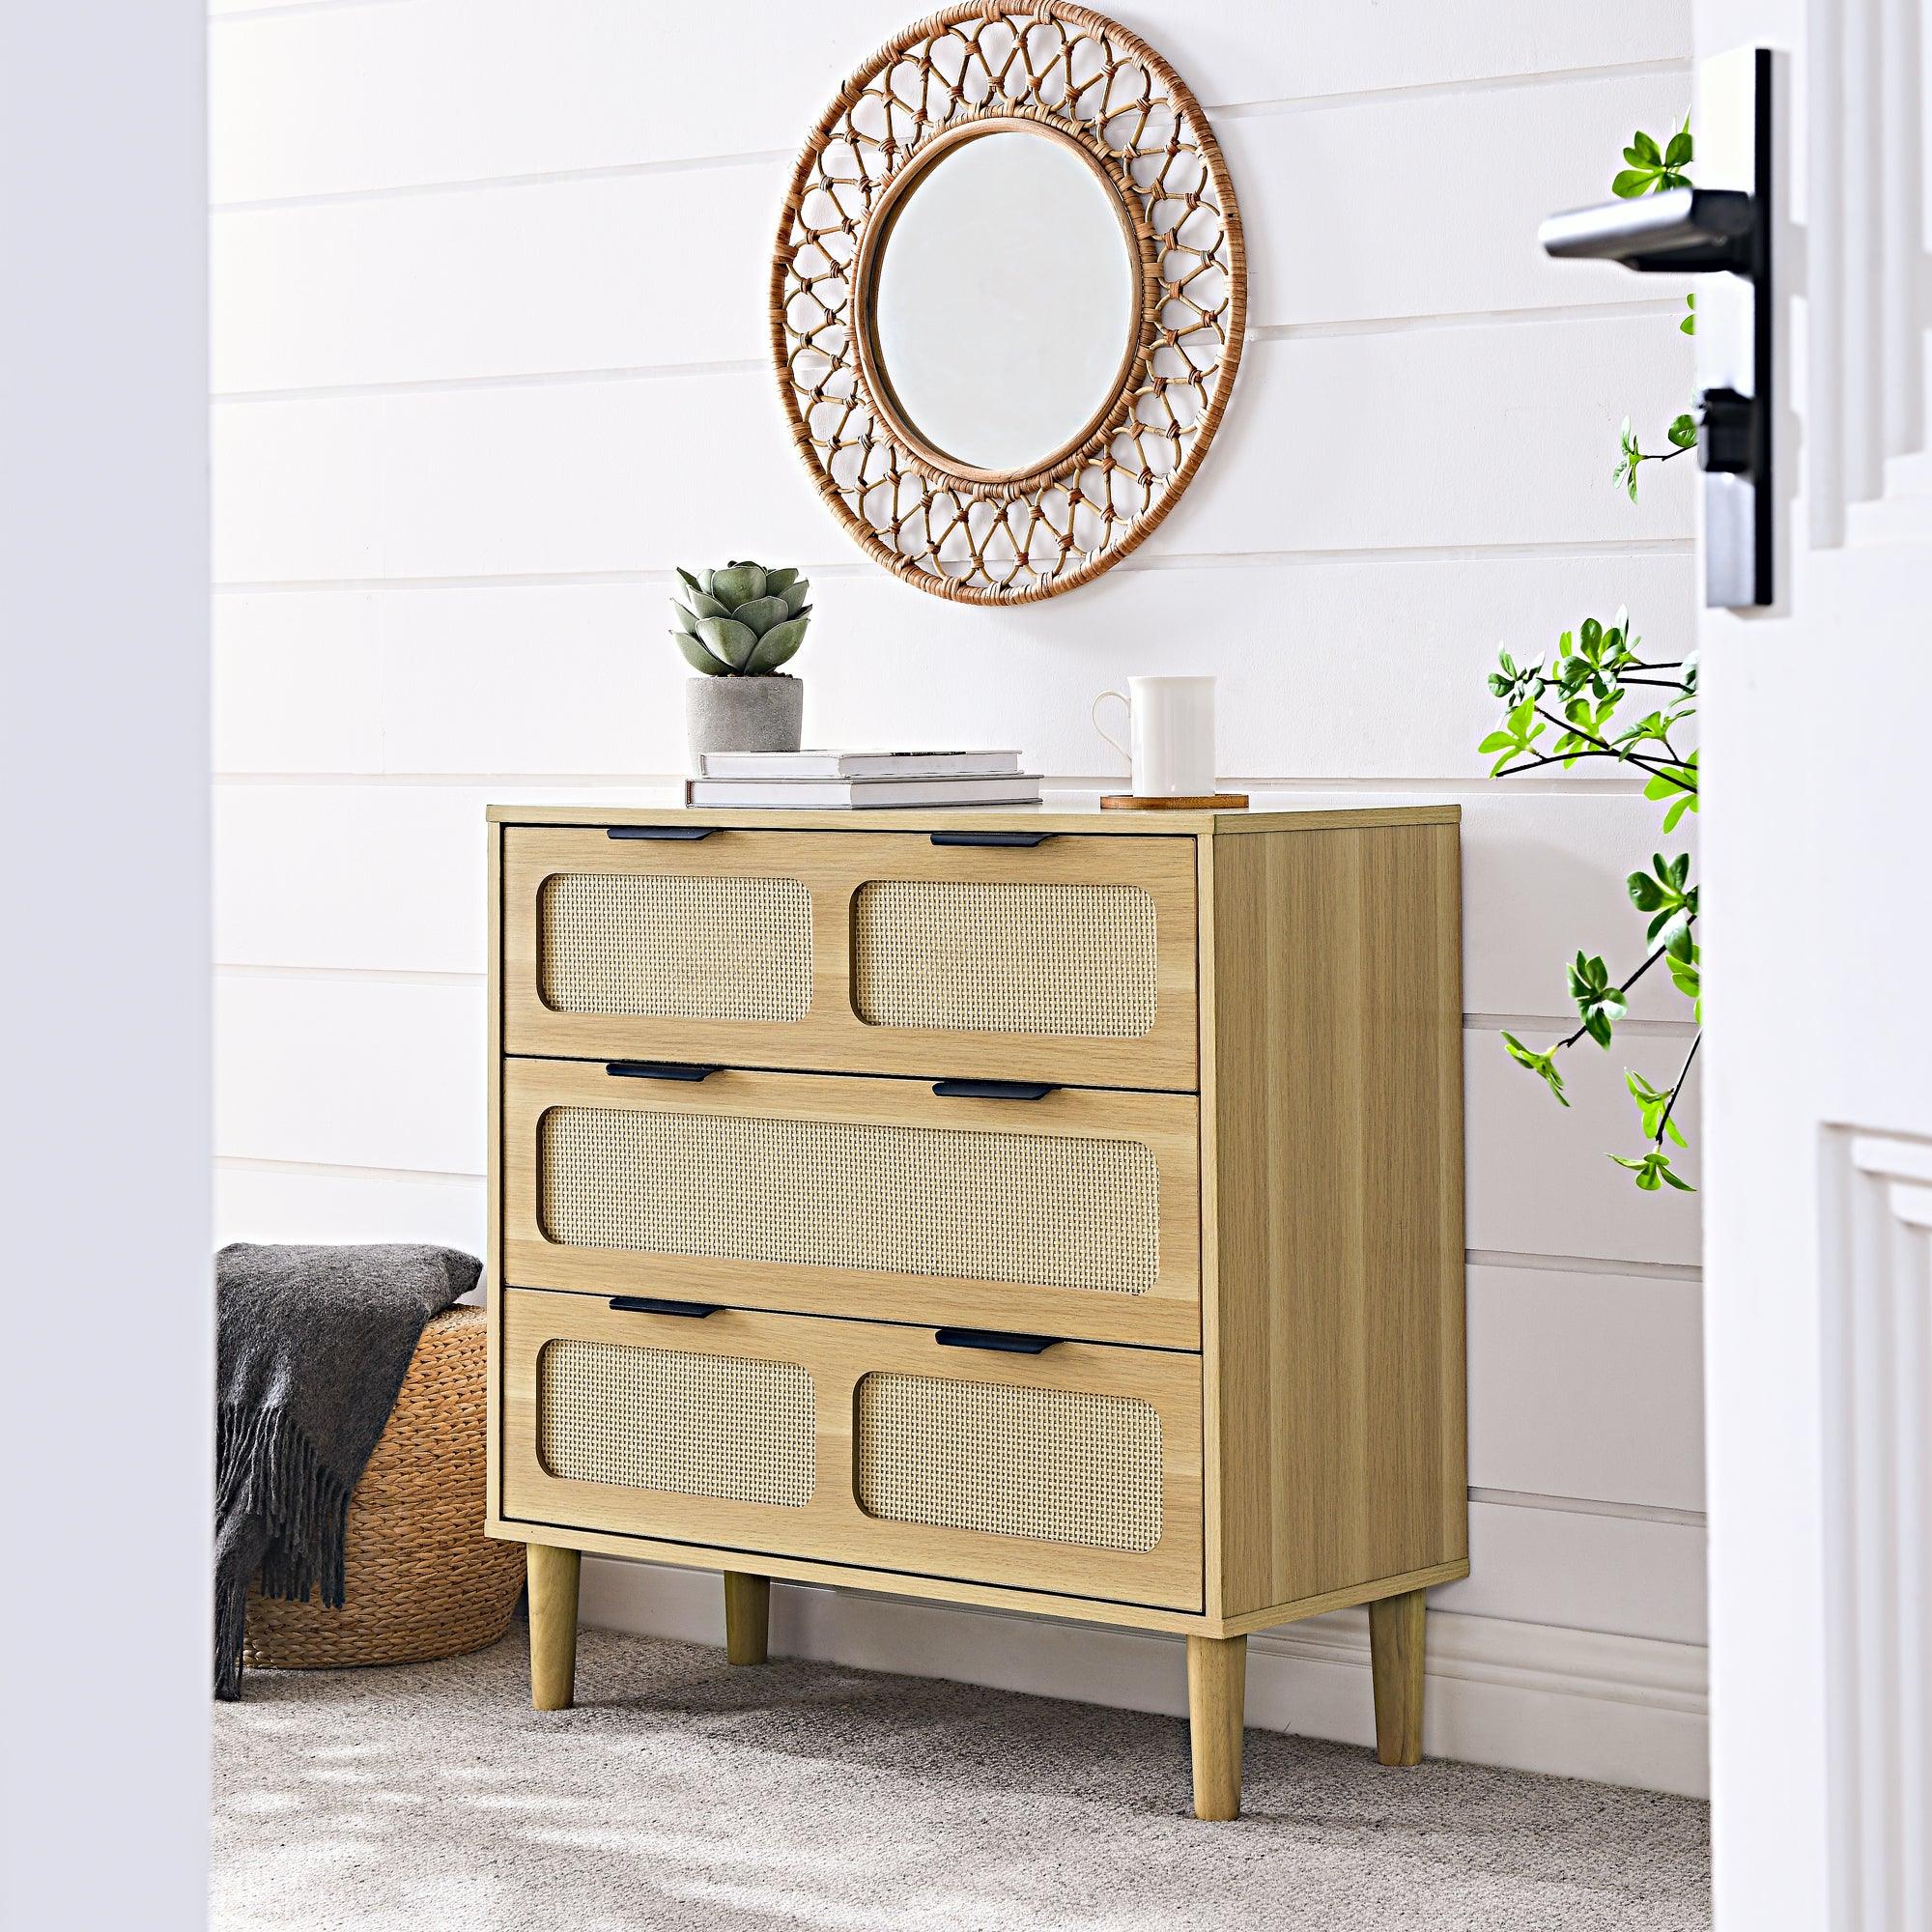 🆓🚛 3 Drawer Dresser, Modern Rattan Dresser Cabinet With Wide Drawers & Metal Handles, Farmhouse Wood Storage Drawer Chest for Bedroom, Living Room, Hallway, Entrance